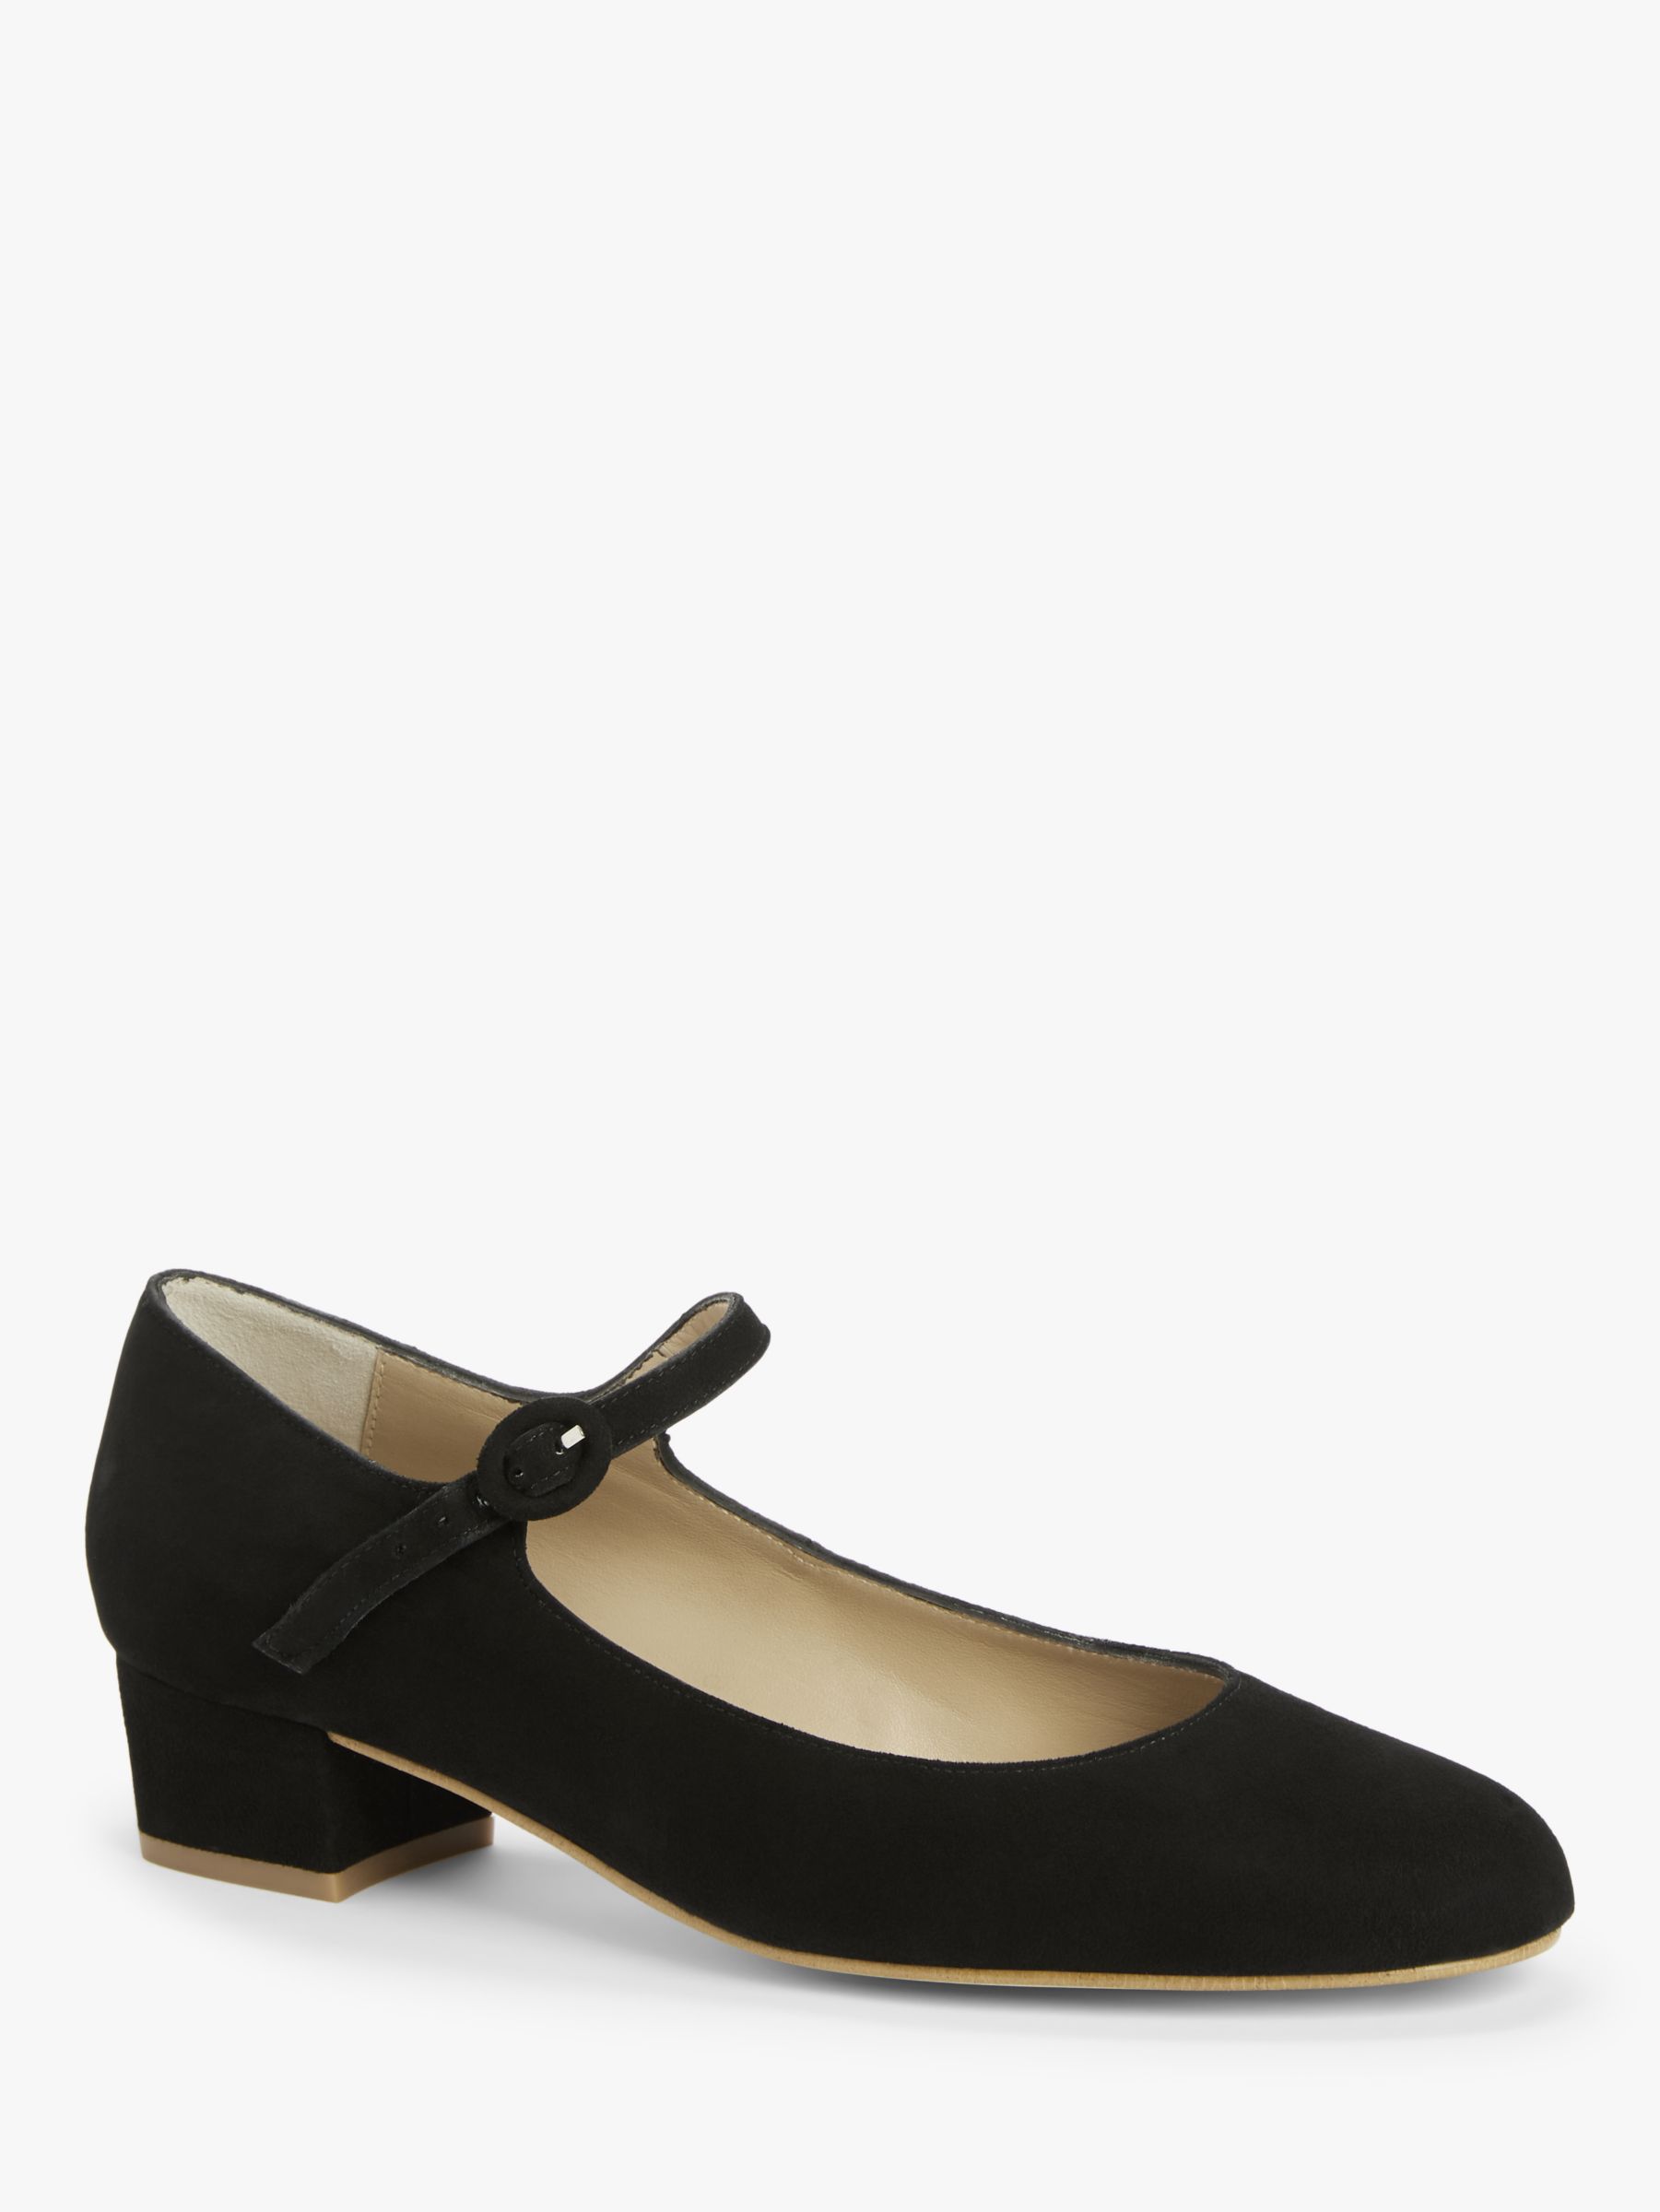 John Lewis Anastasia Mary Jane Court Shoes, Black Suede